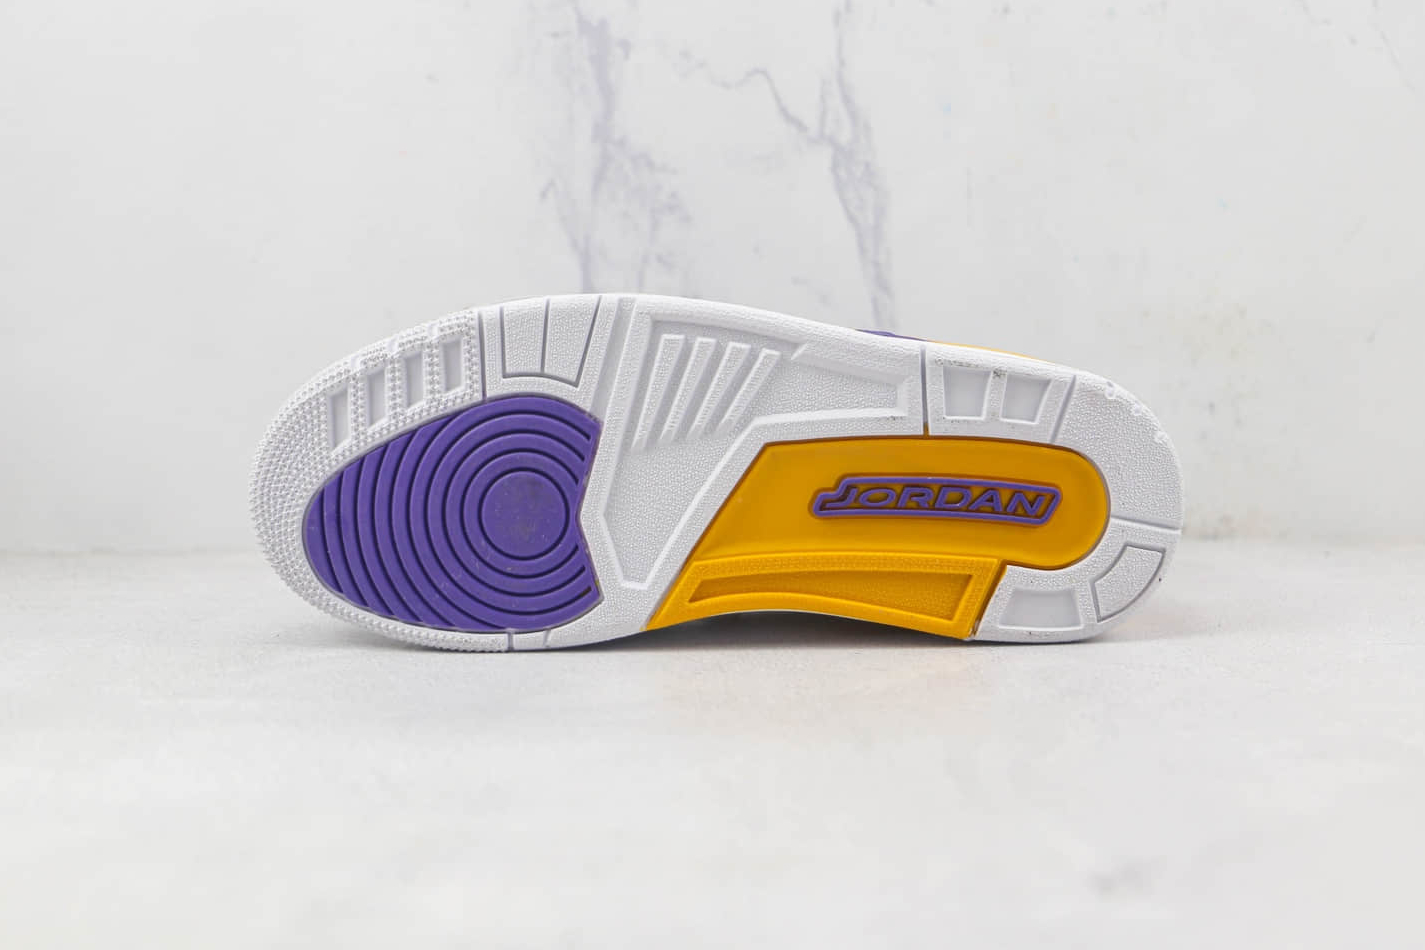 Nike Air Jordan Legacy 312 Low Purple White Yellow - Iconic Style for the Modern Sneakerhead